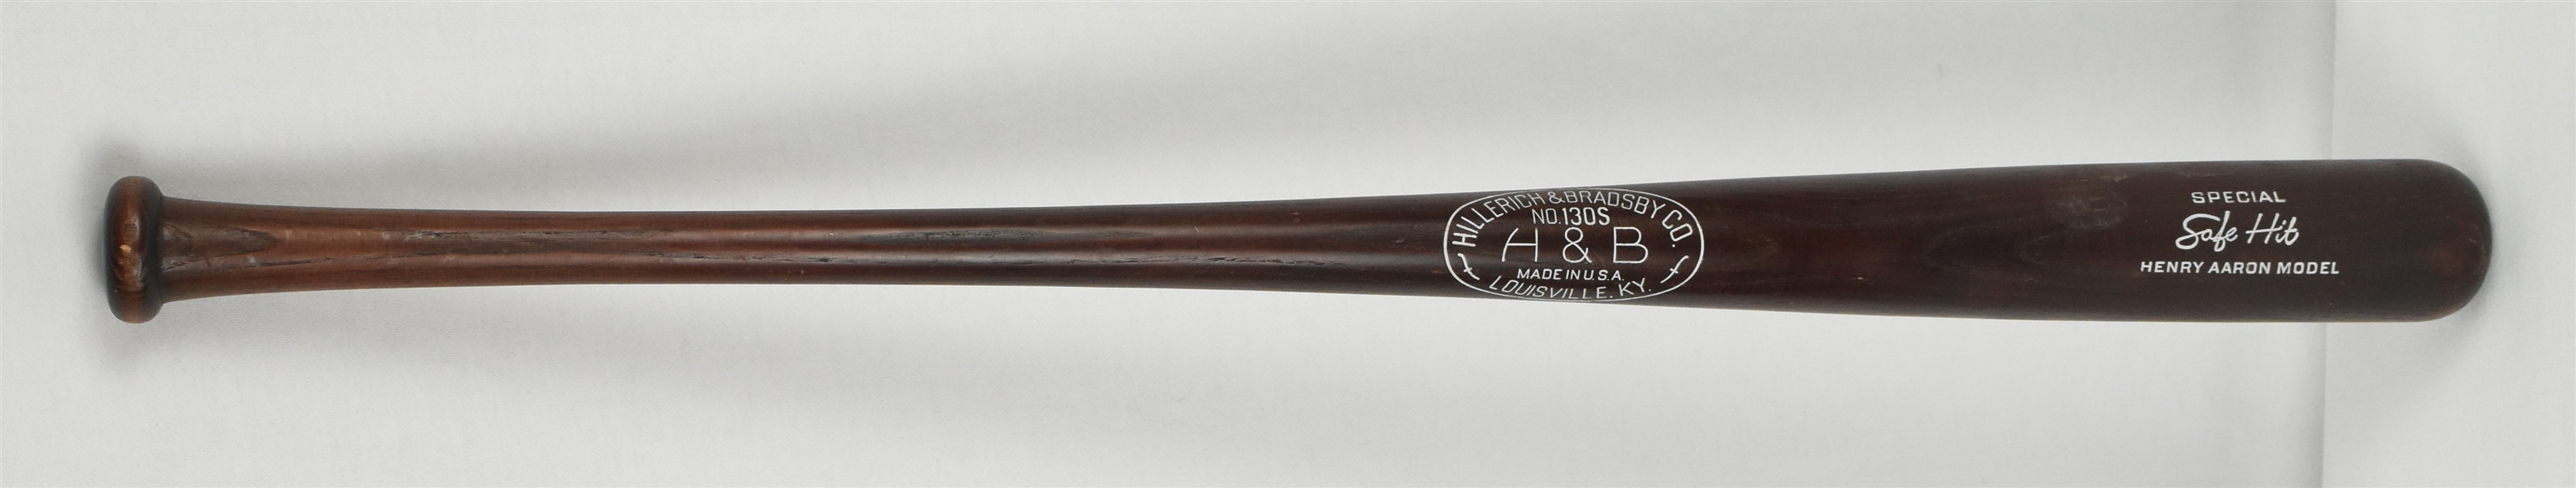 Hank Aaron Vintage Safe Hit Louisville Slugger H&B Baseball Bat